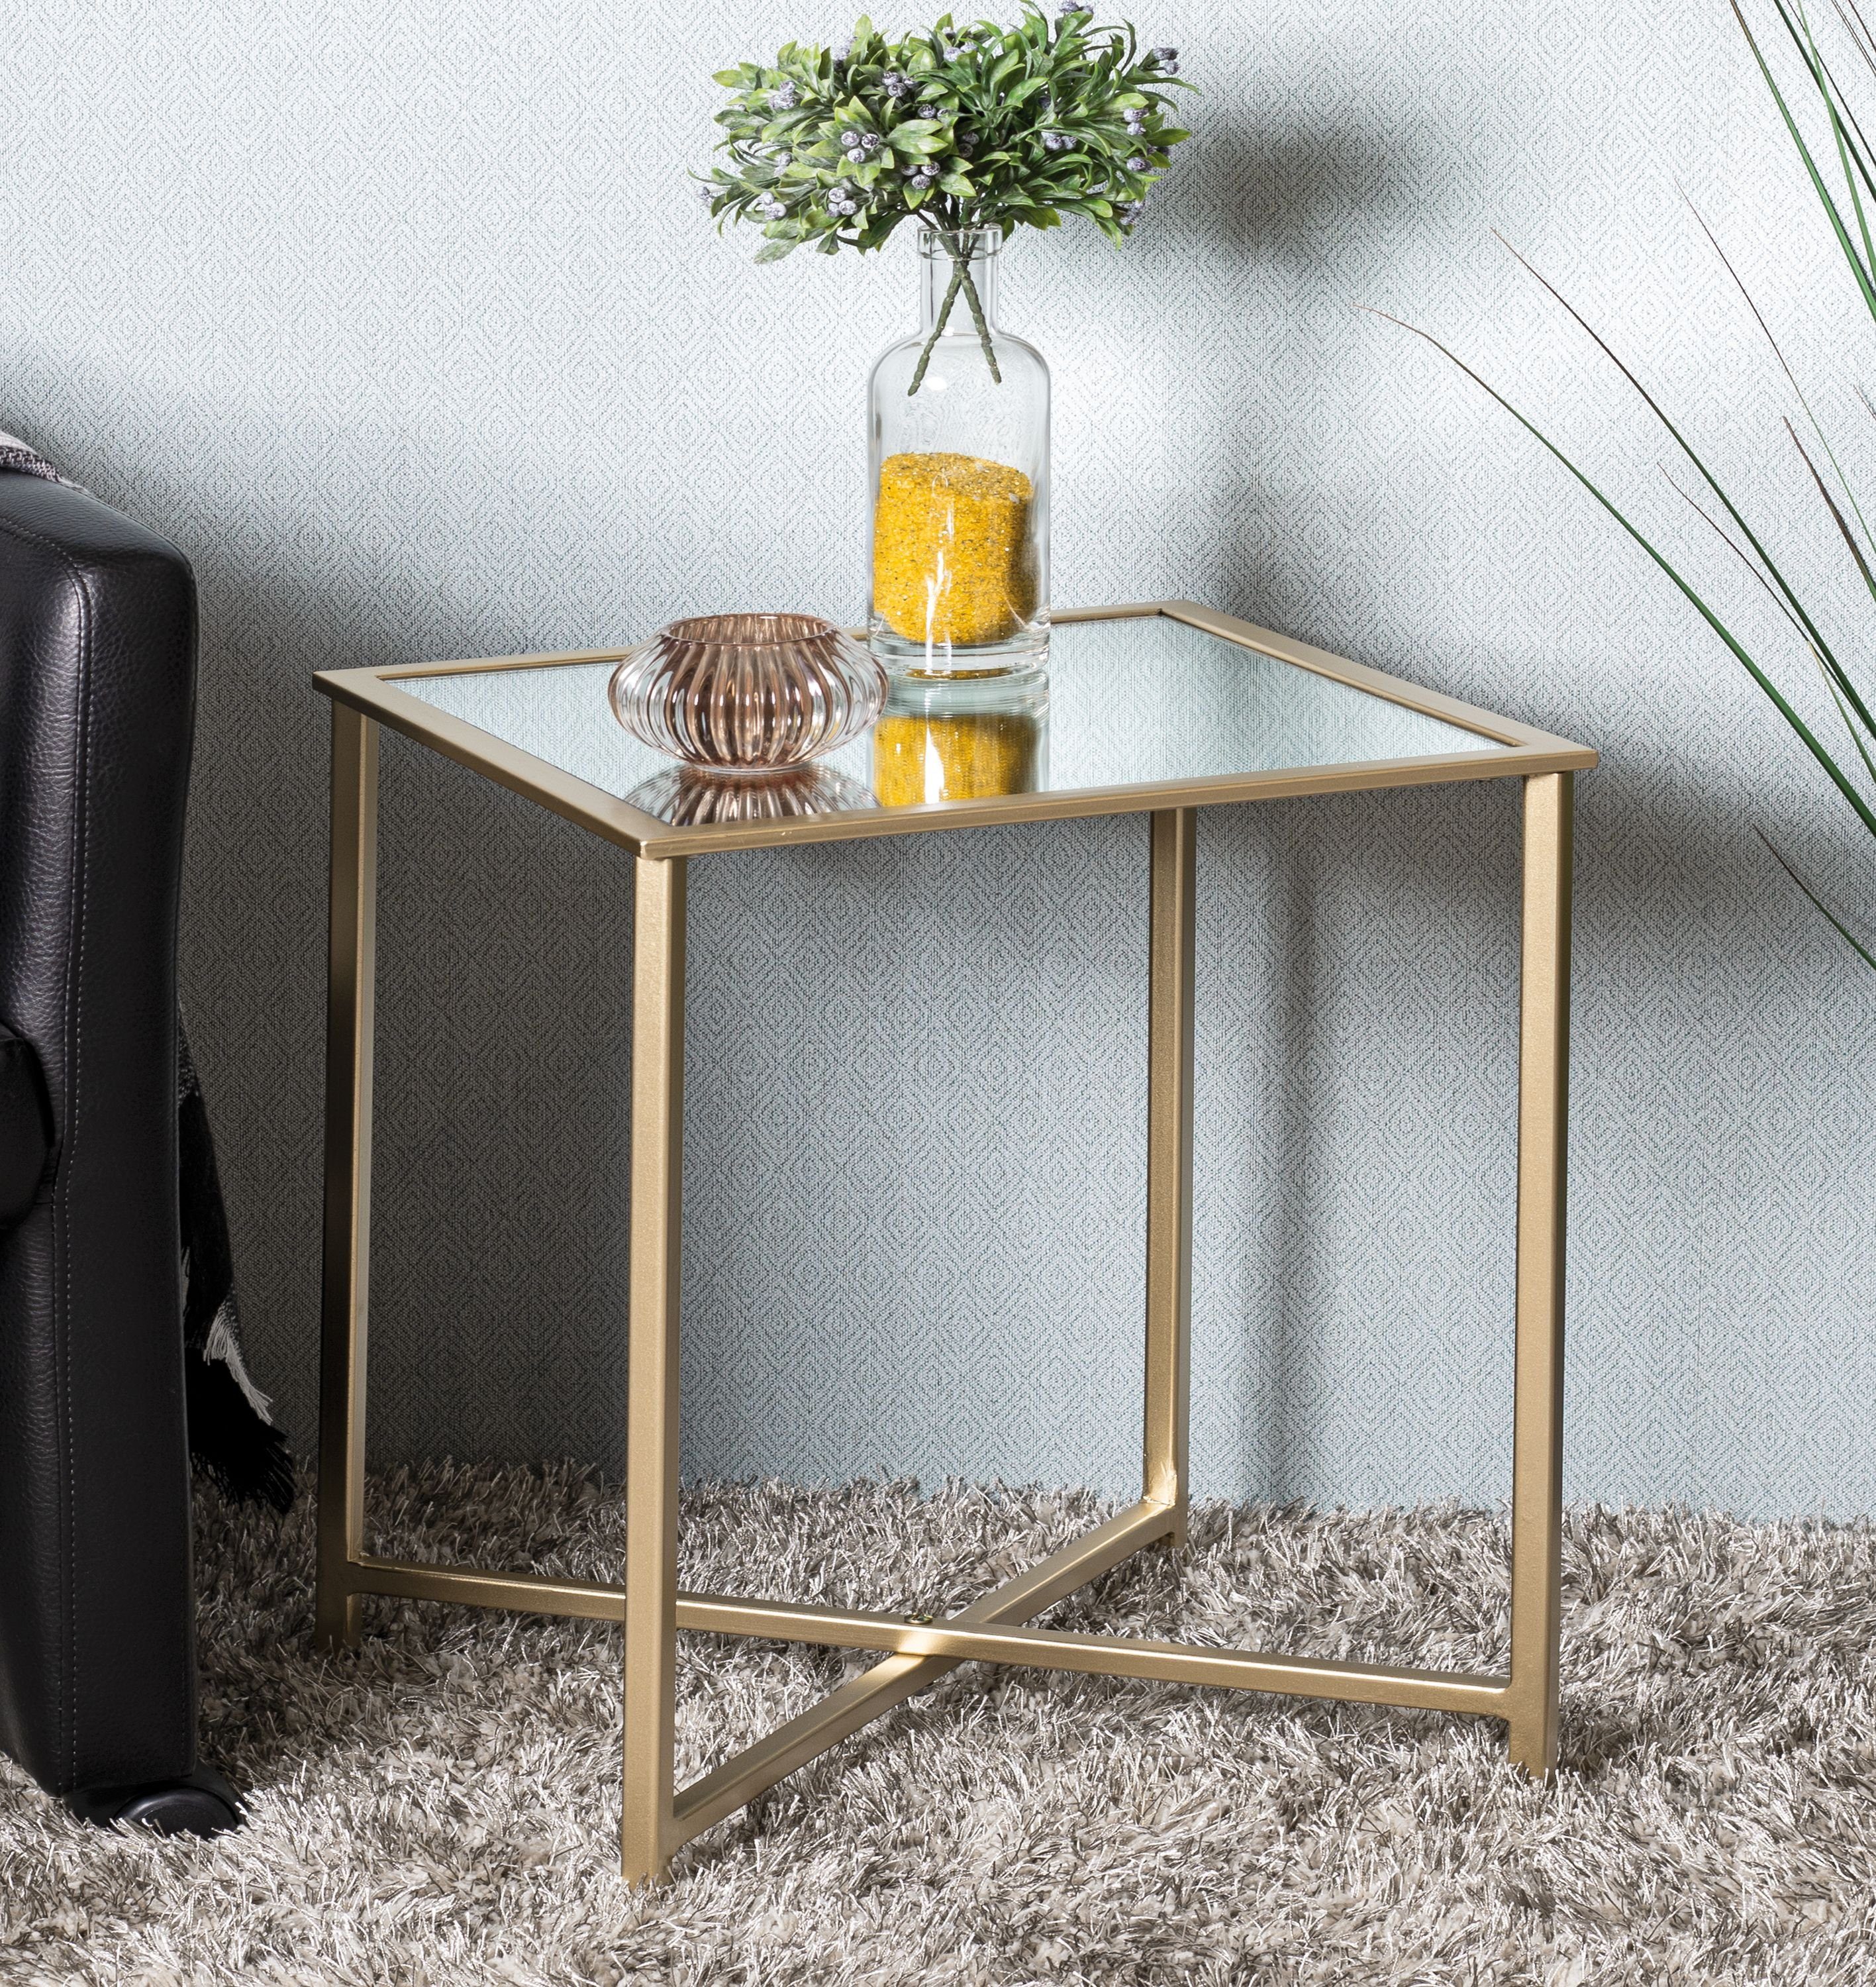 HAKU Möbel HAKU cm Beistelltisch 60x45x60 Beistelltisch, Beistelltisch gold BHT (BHT cm) 60x45x60